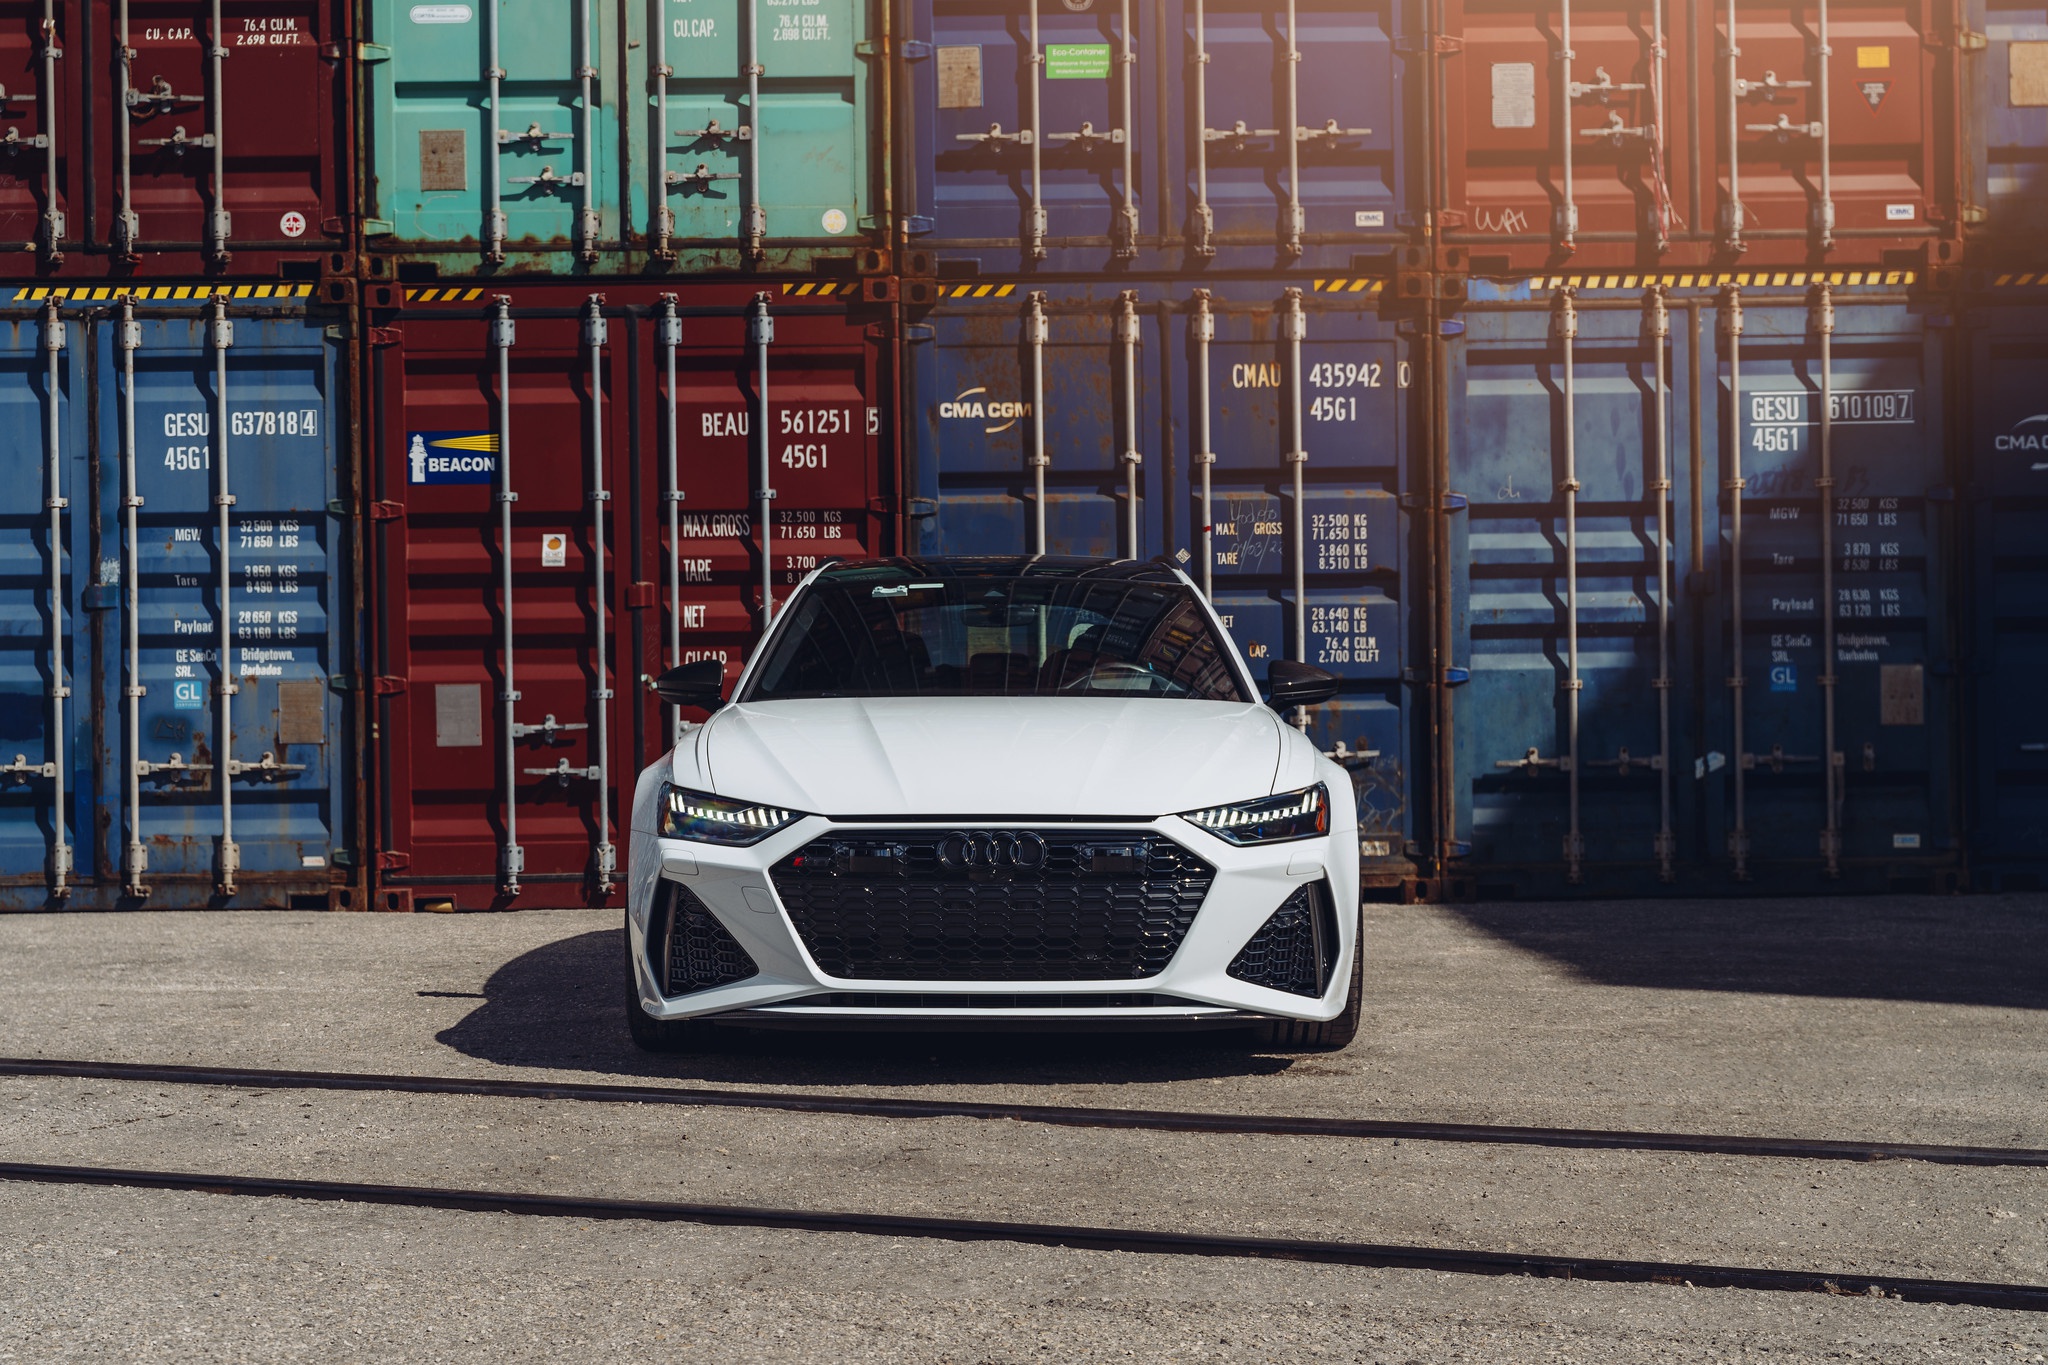 Vehicles Audi RS6 Avant HD Wallpaper | Background Image